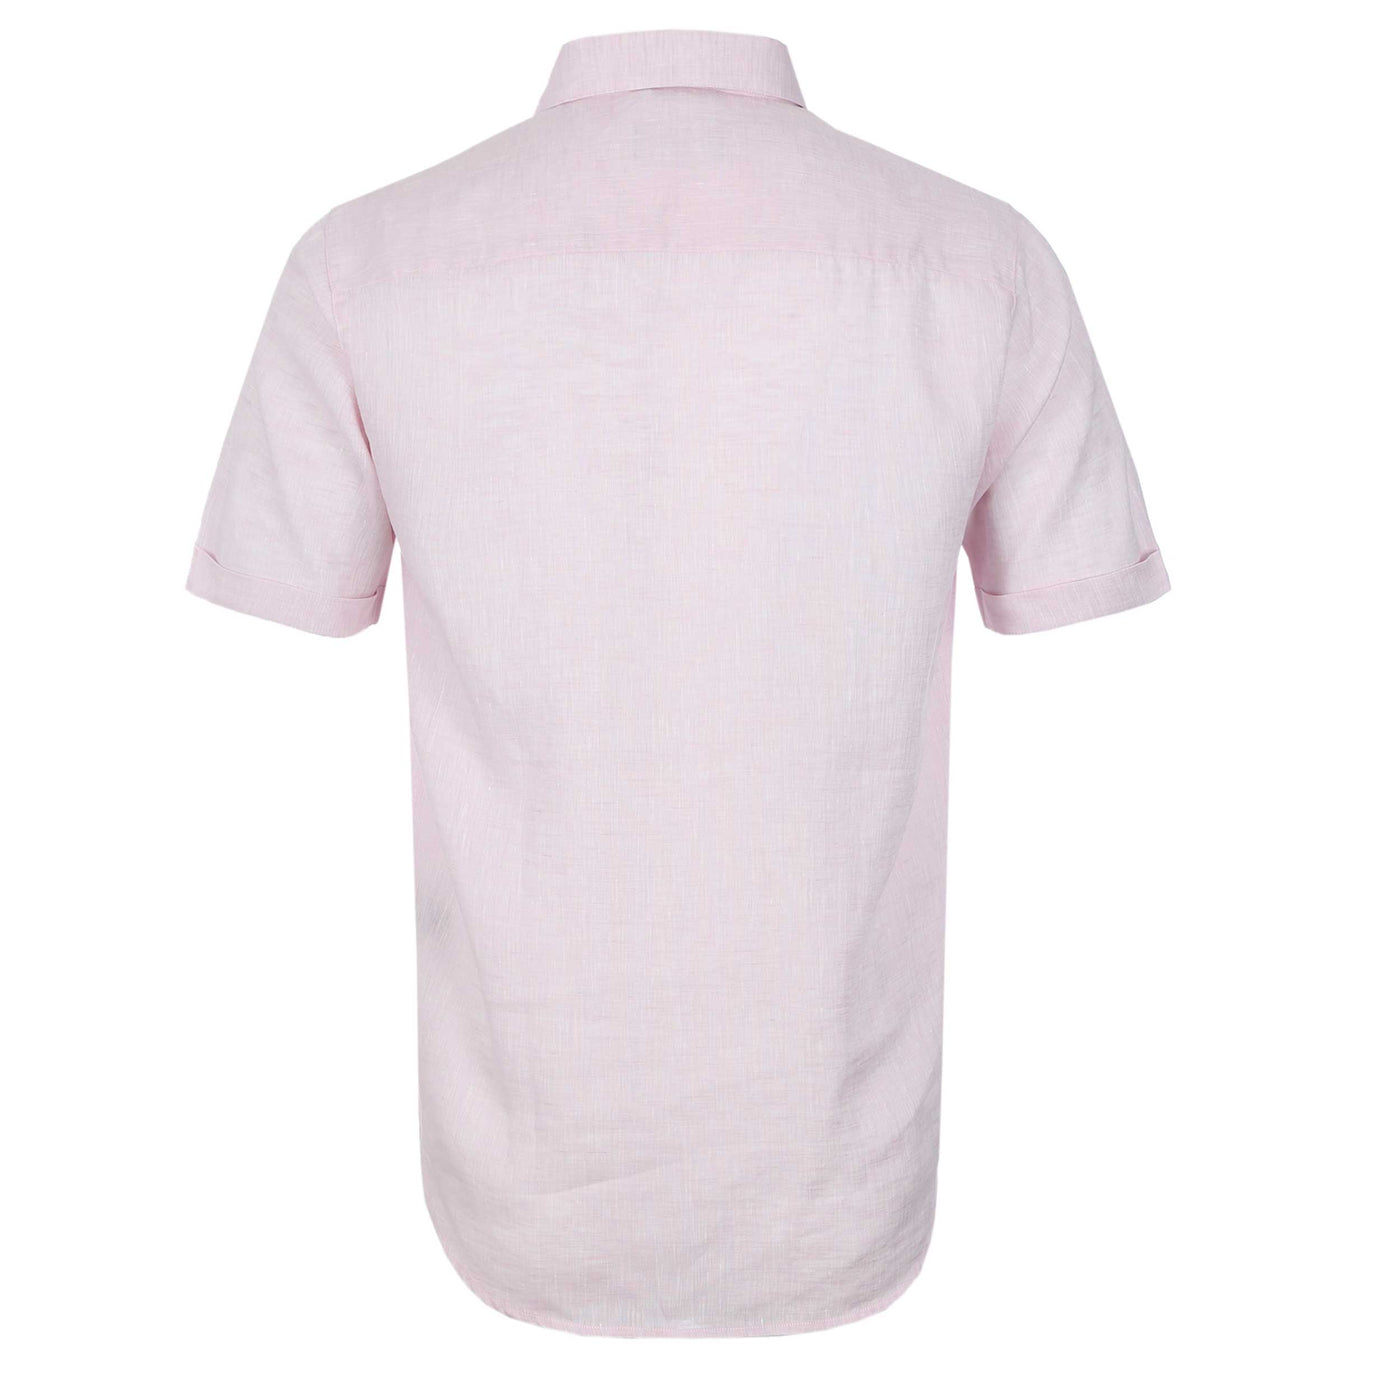 Oliver Sweeney Eakring SS Shirt in Pink Back